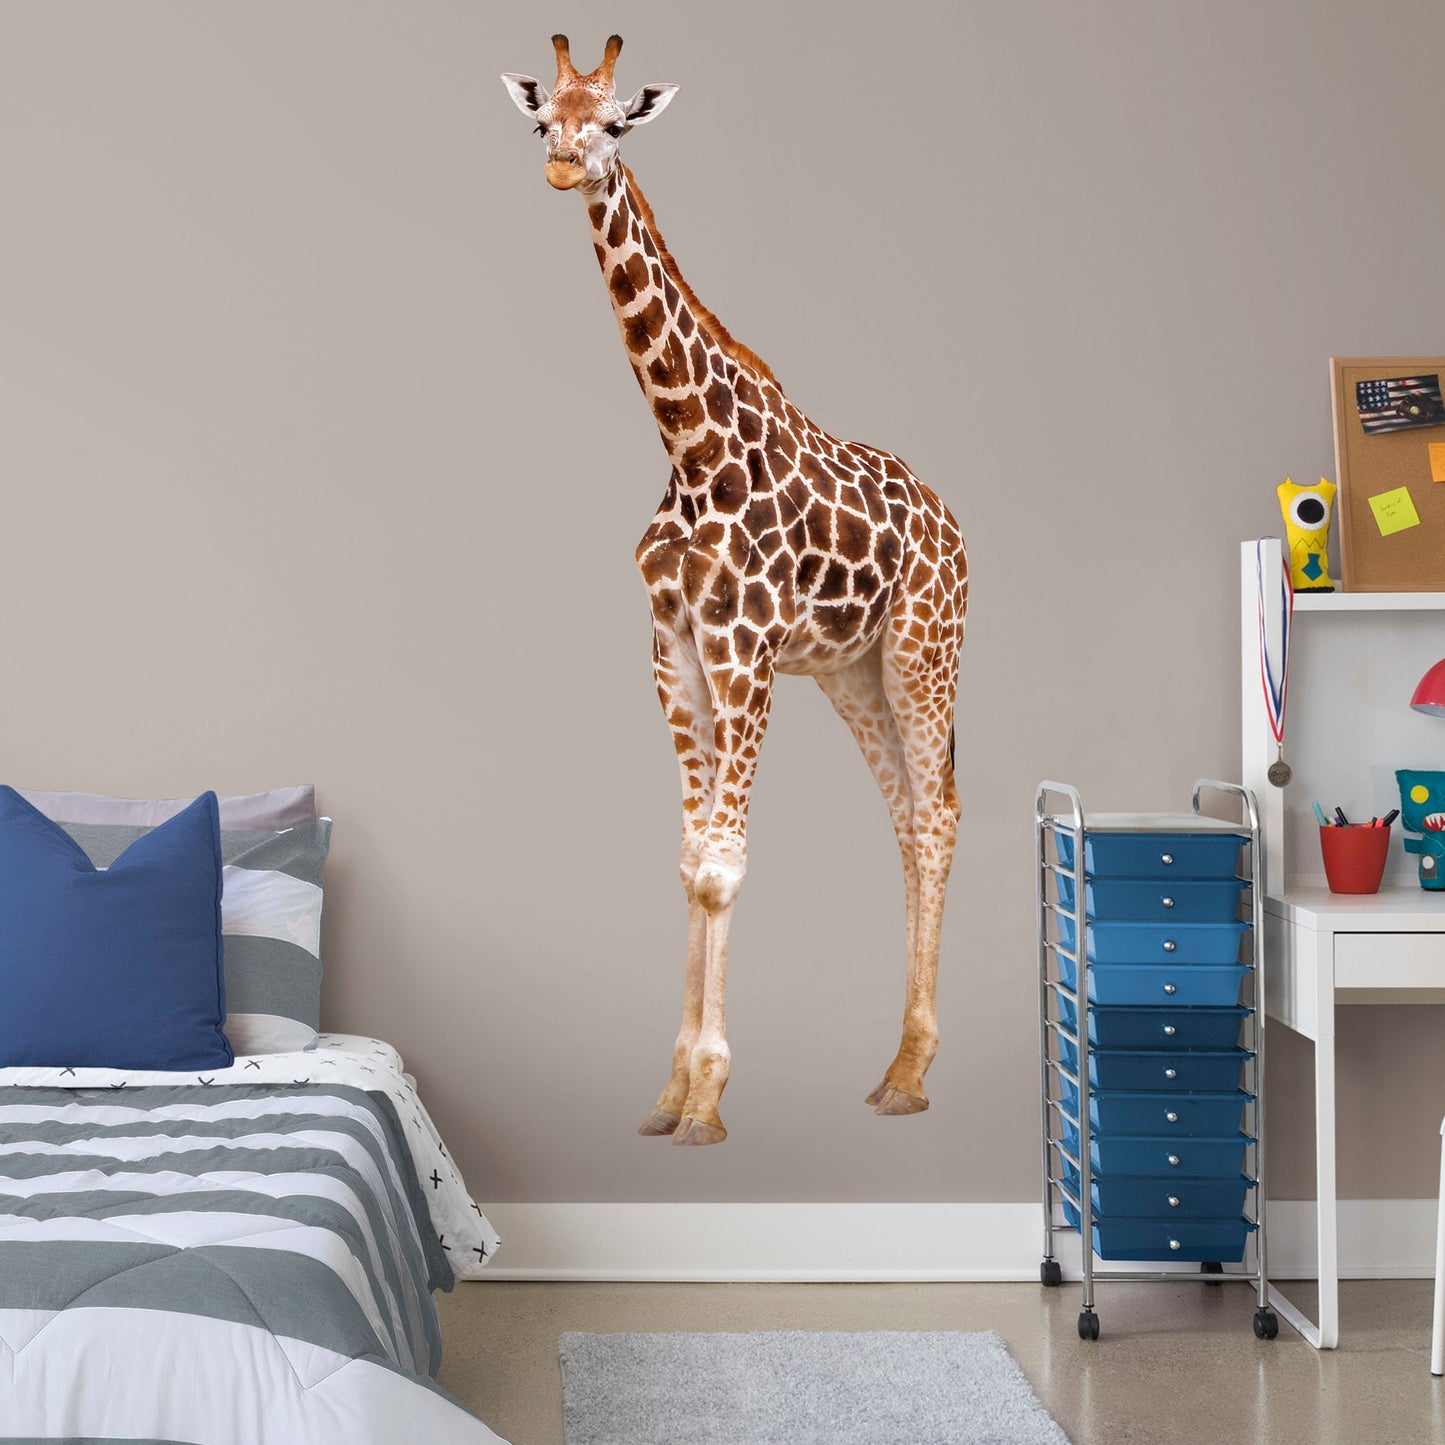 Afraid Sticker for Sale by giraffes69ing